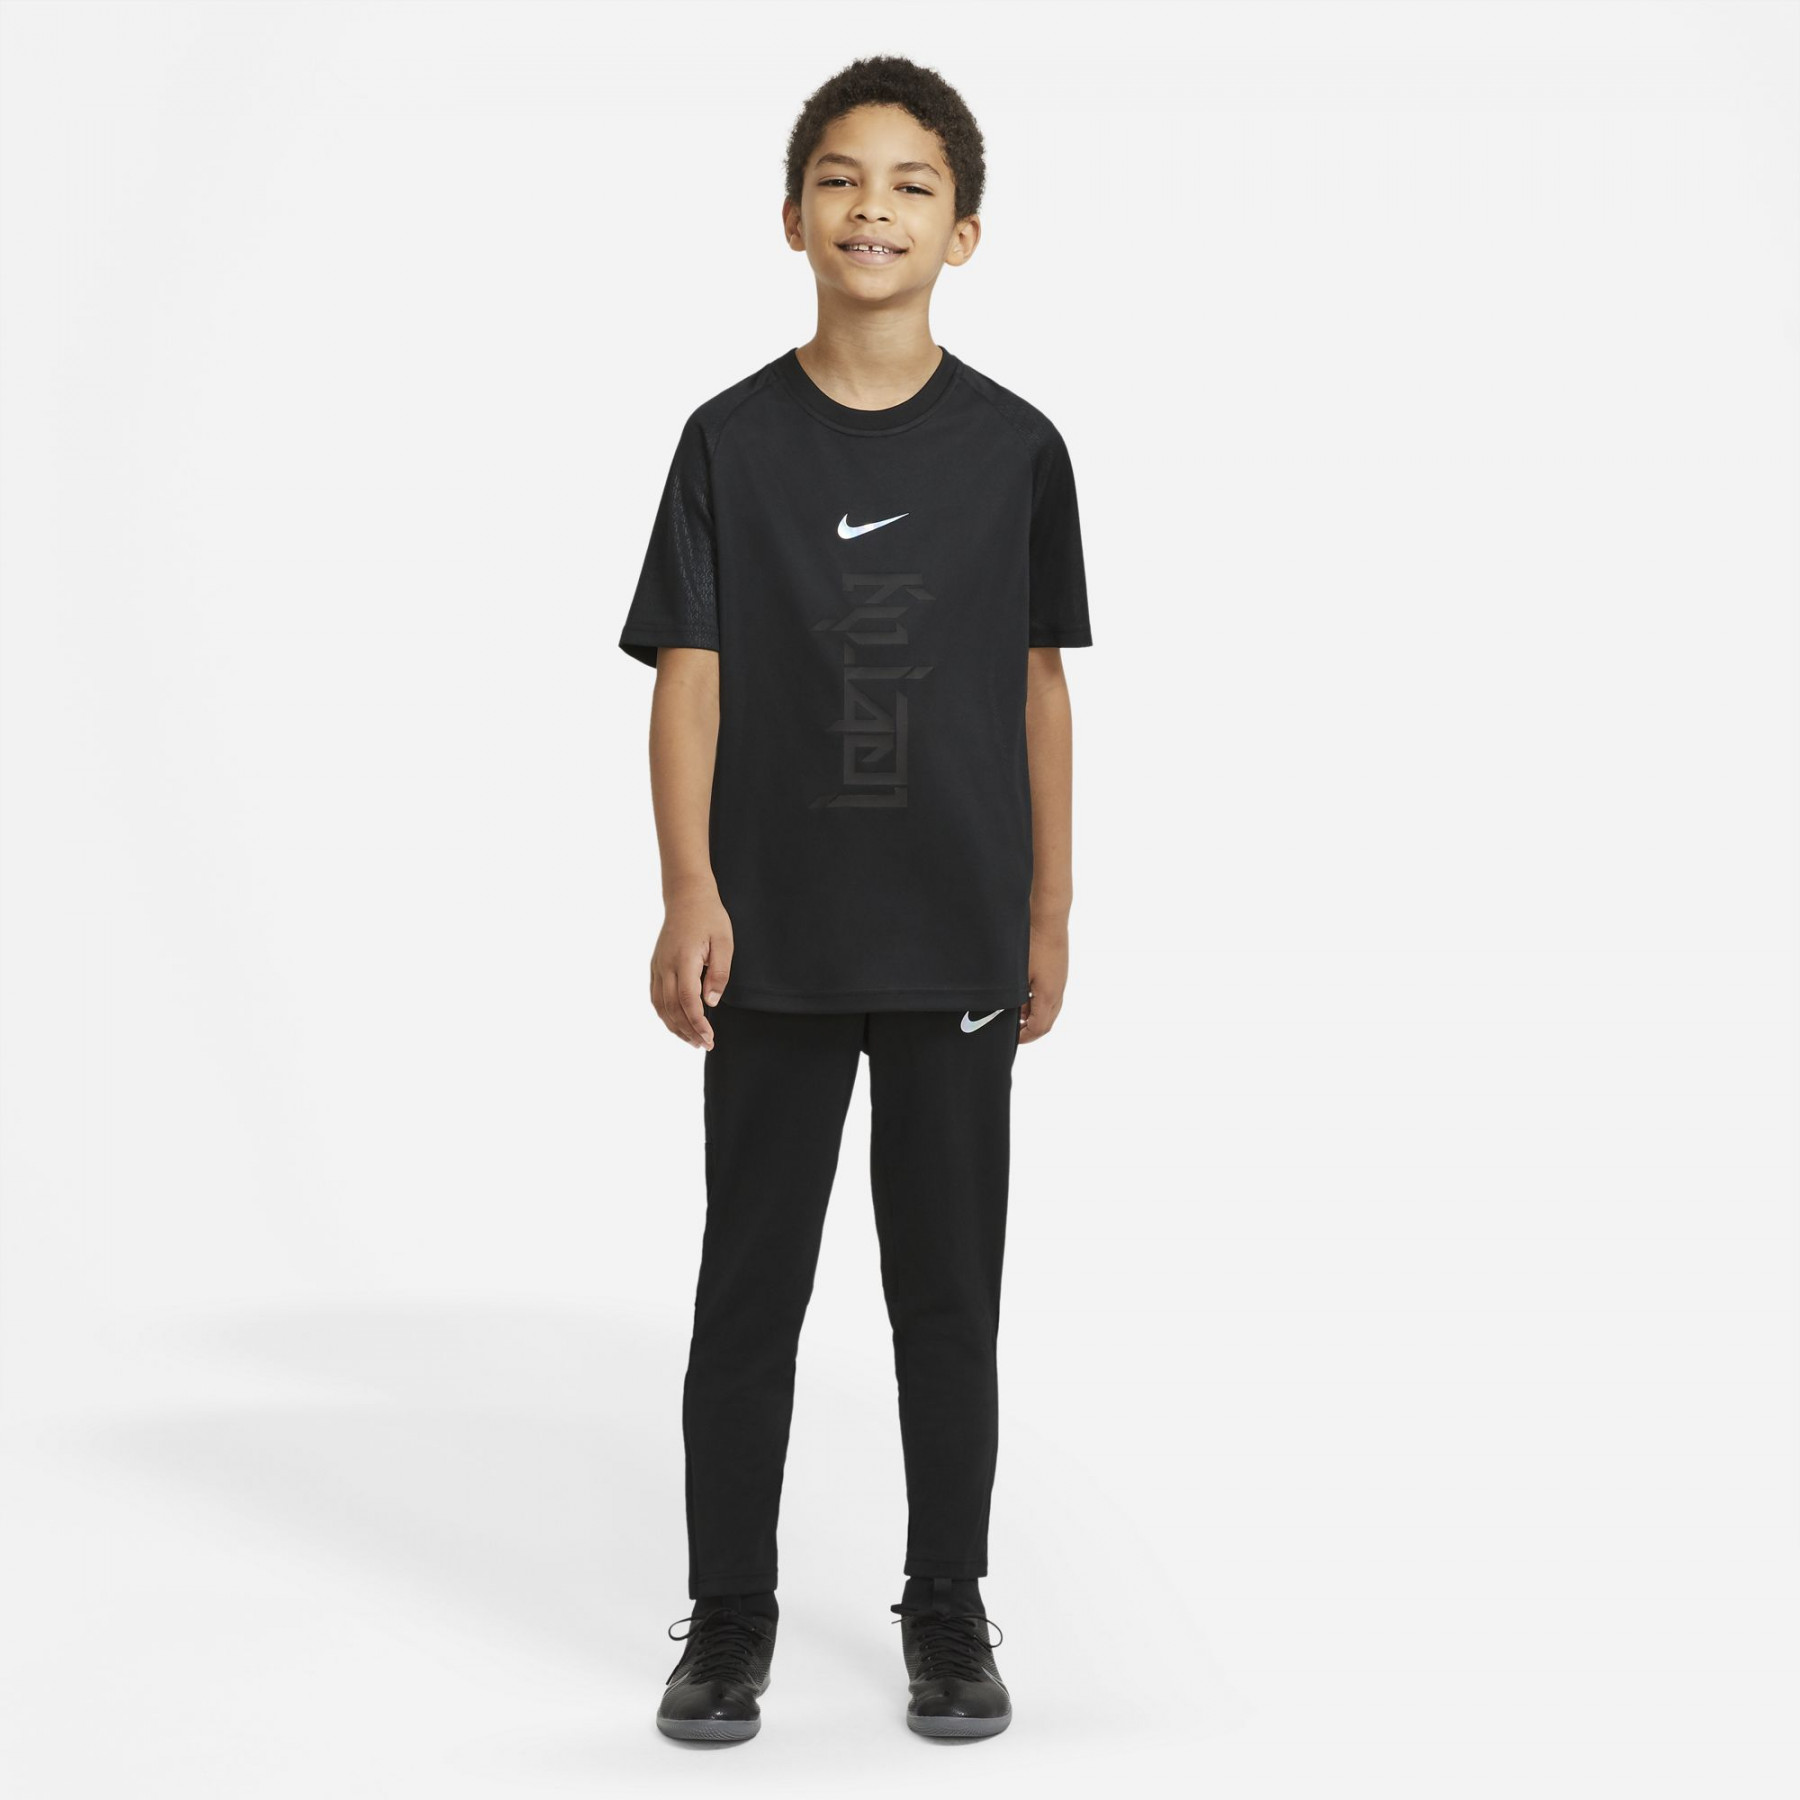 Children's jersey Nike Dri-FIT Kylian Mbappé